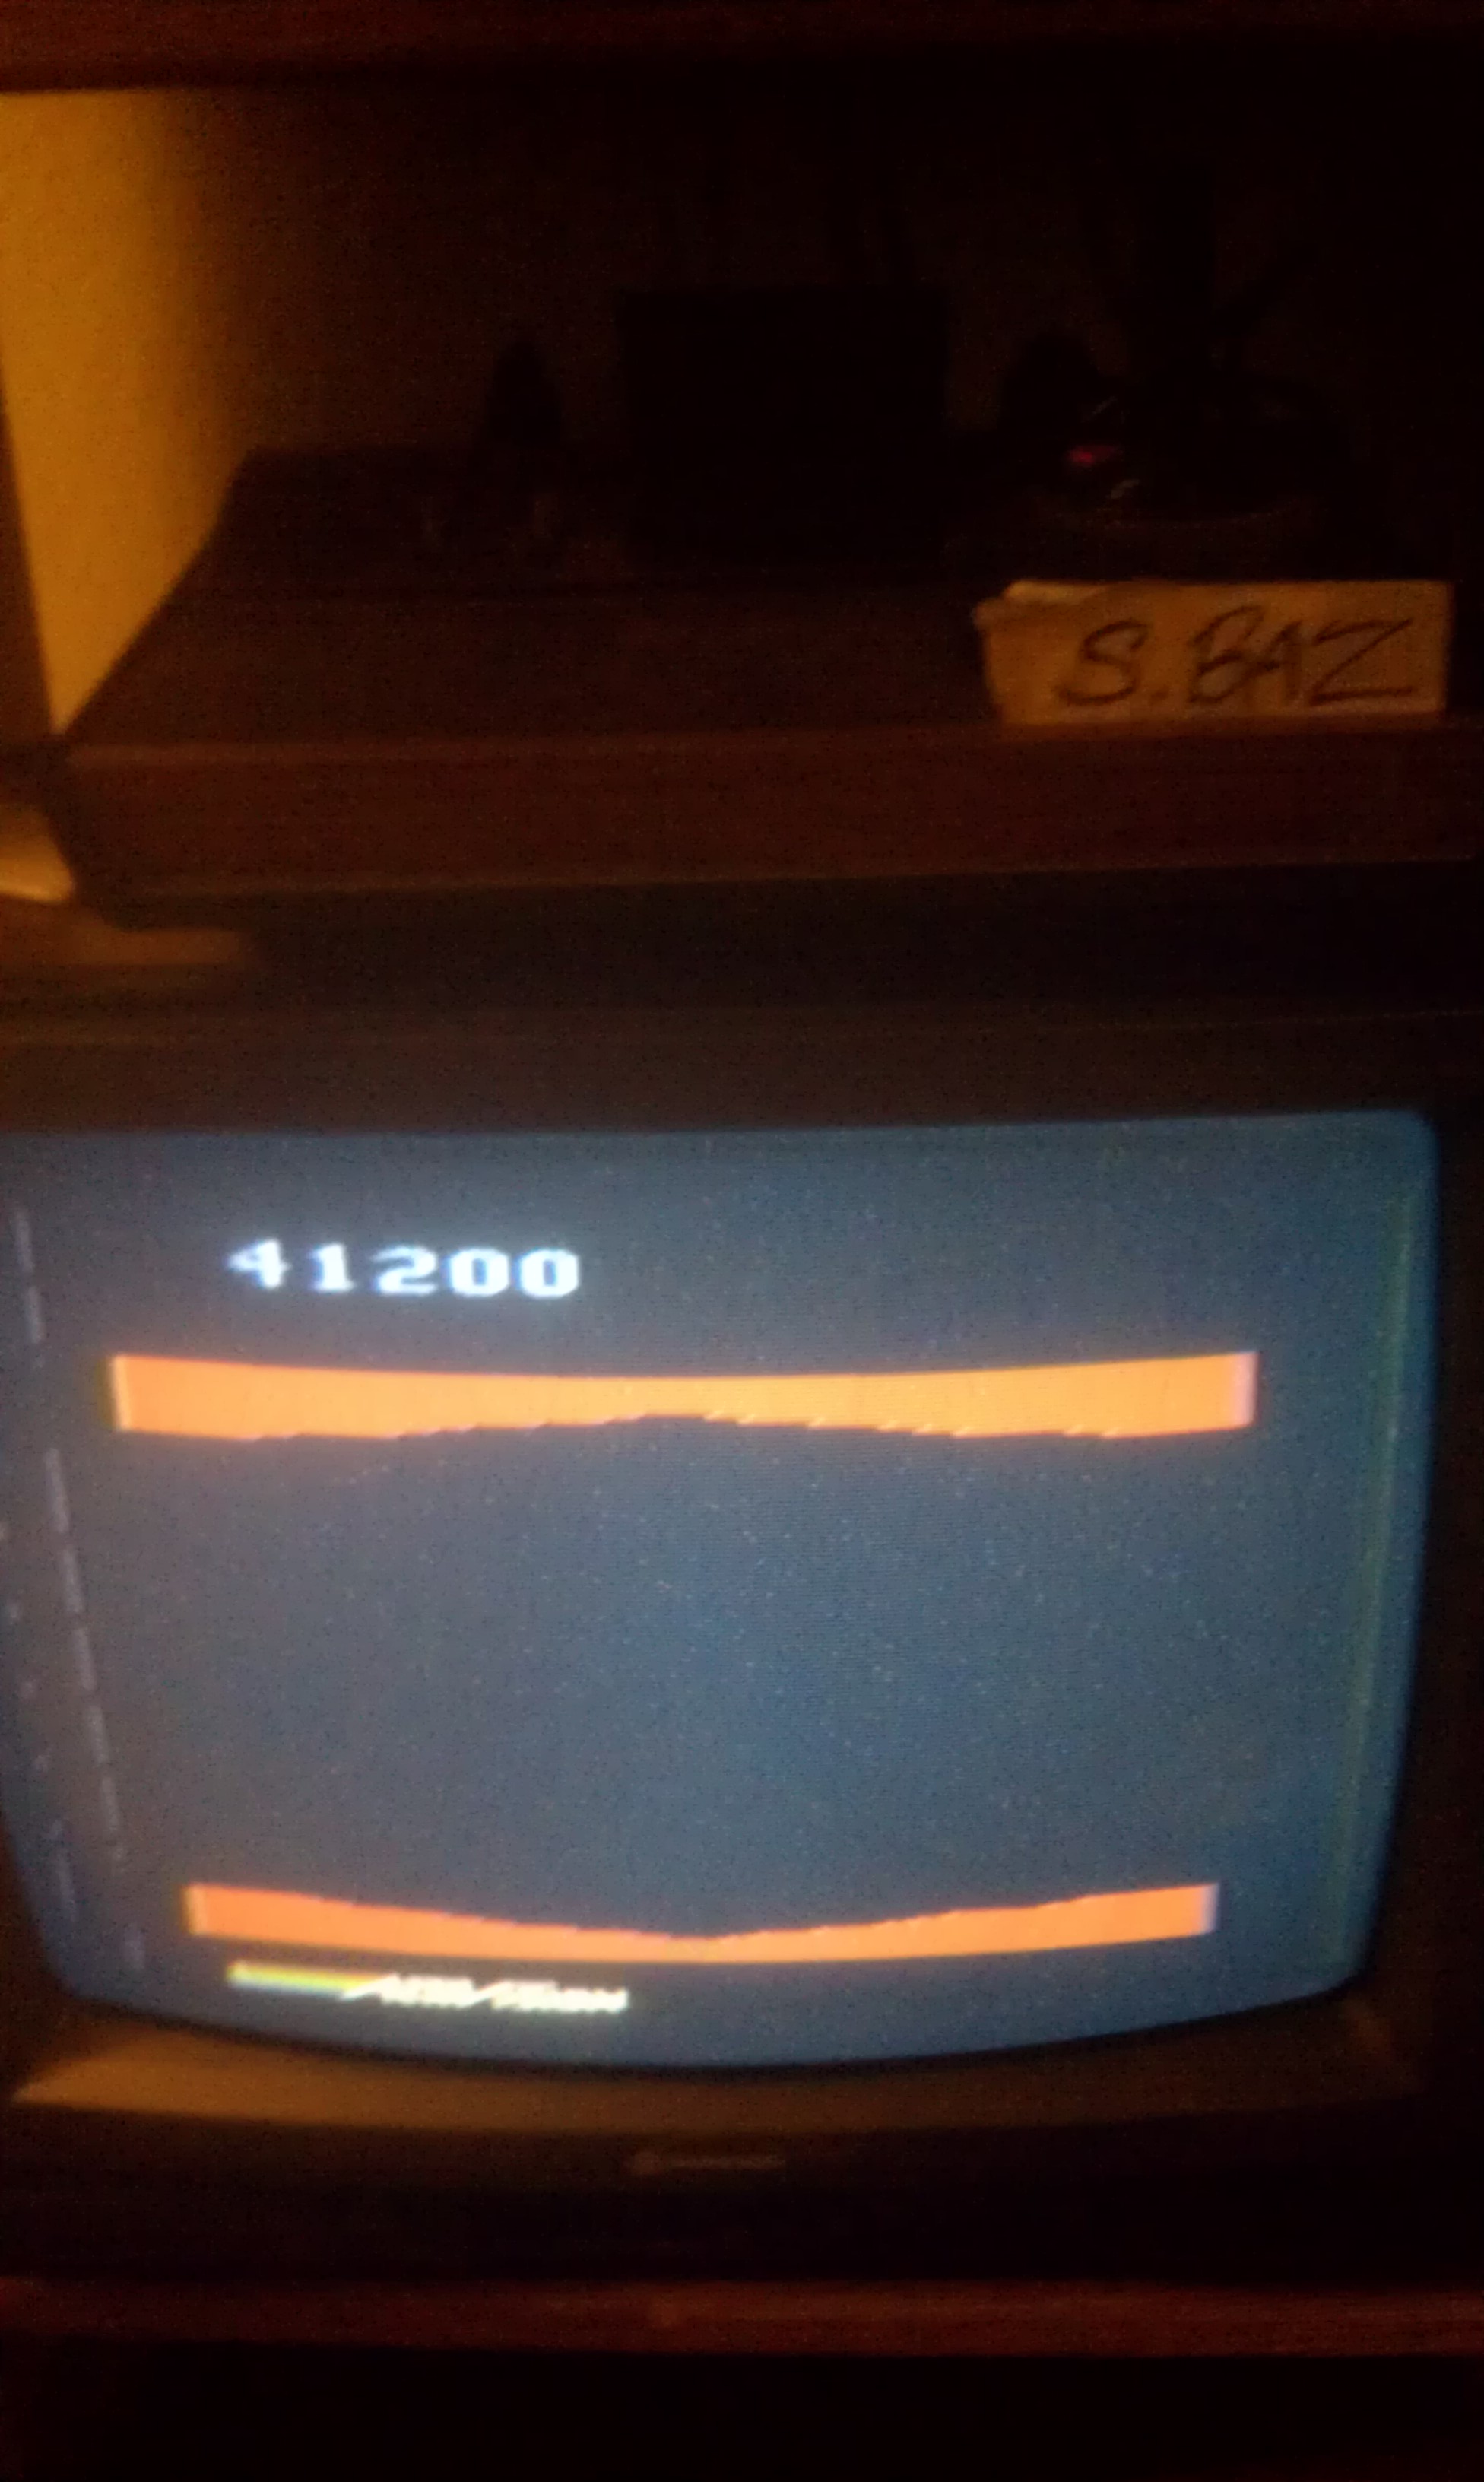 S.BAZ: Plaque Attack (Atari 2600 Novice/B) 41,200 points on 2017-05-13 00:49:20